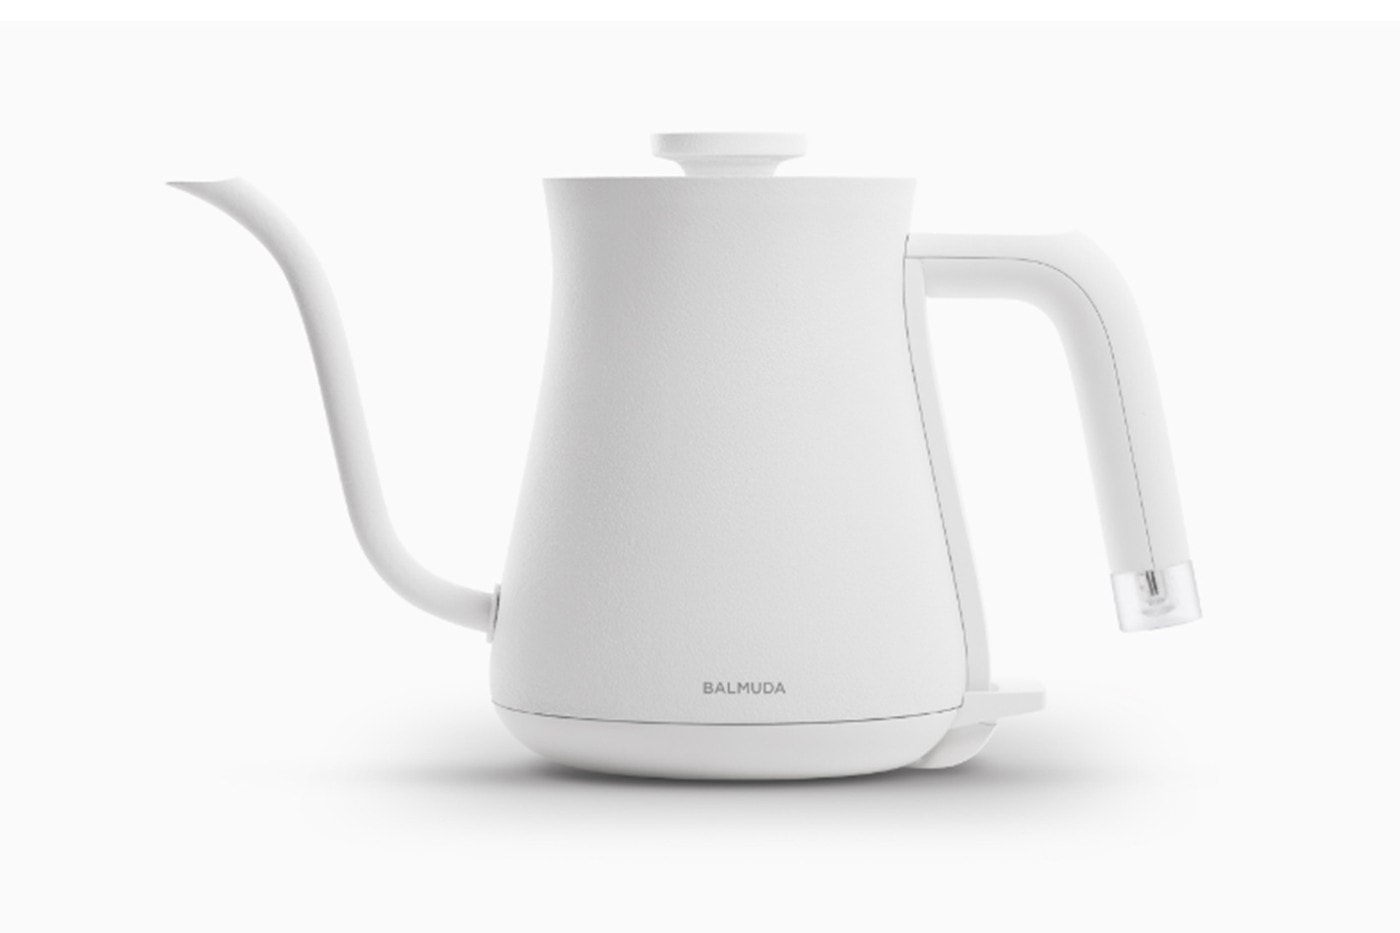 balmuda toaster oven kettle minimalist cooking kitchen home appliances Japan brand